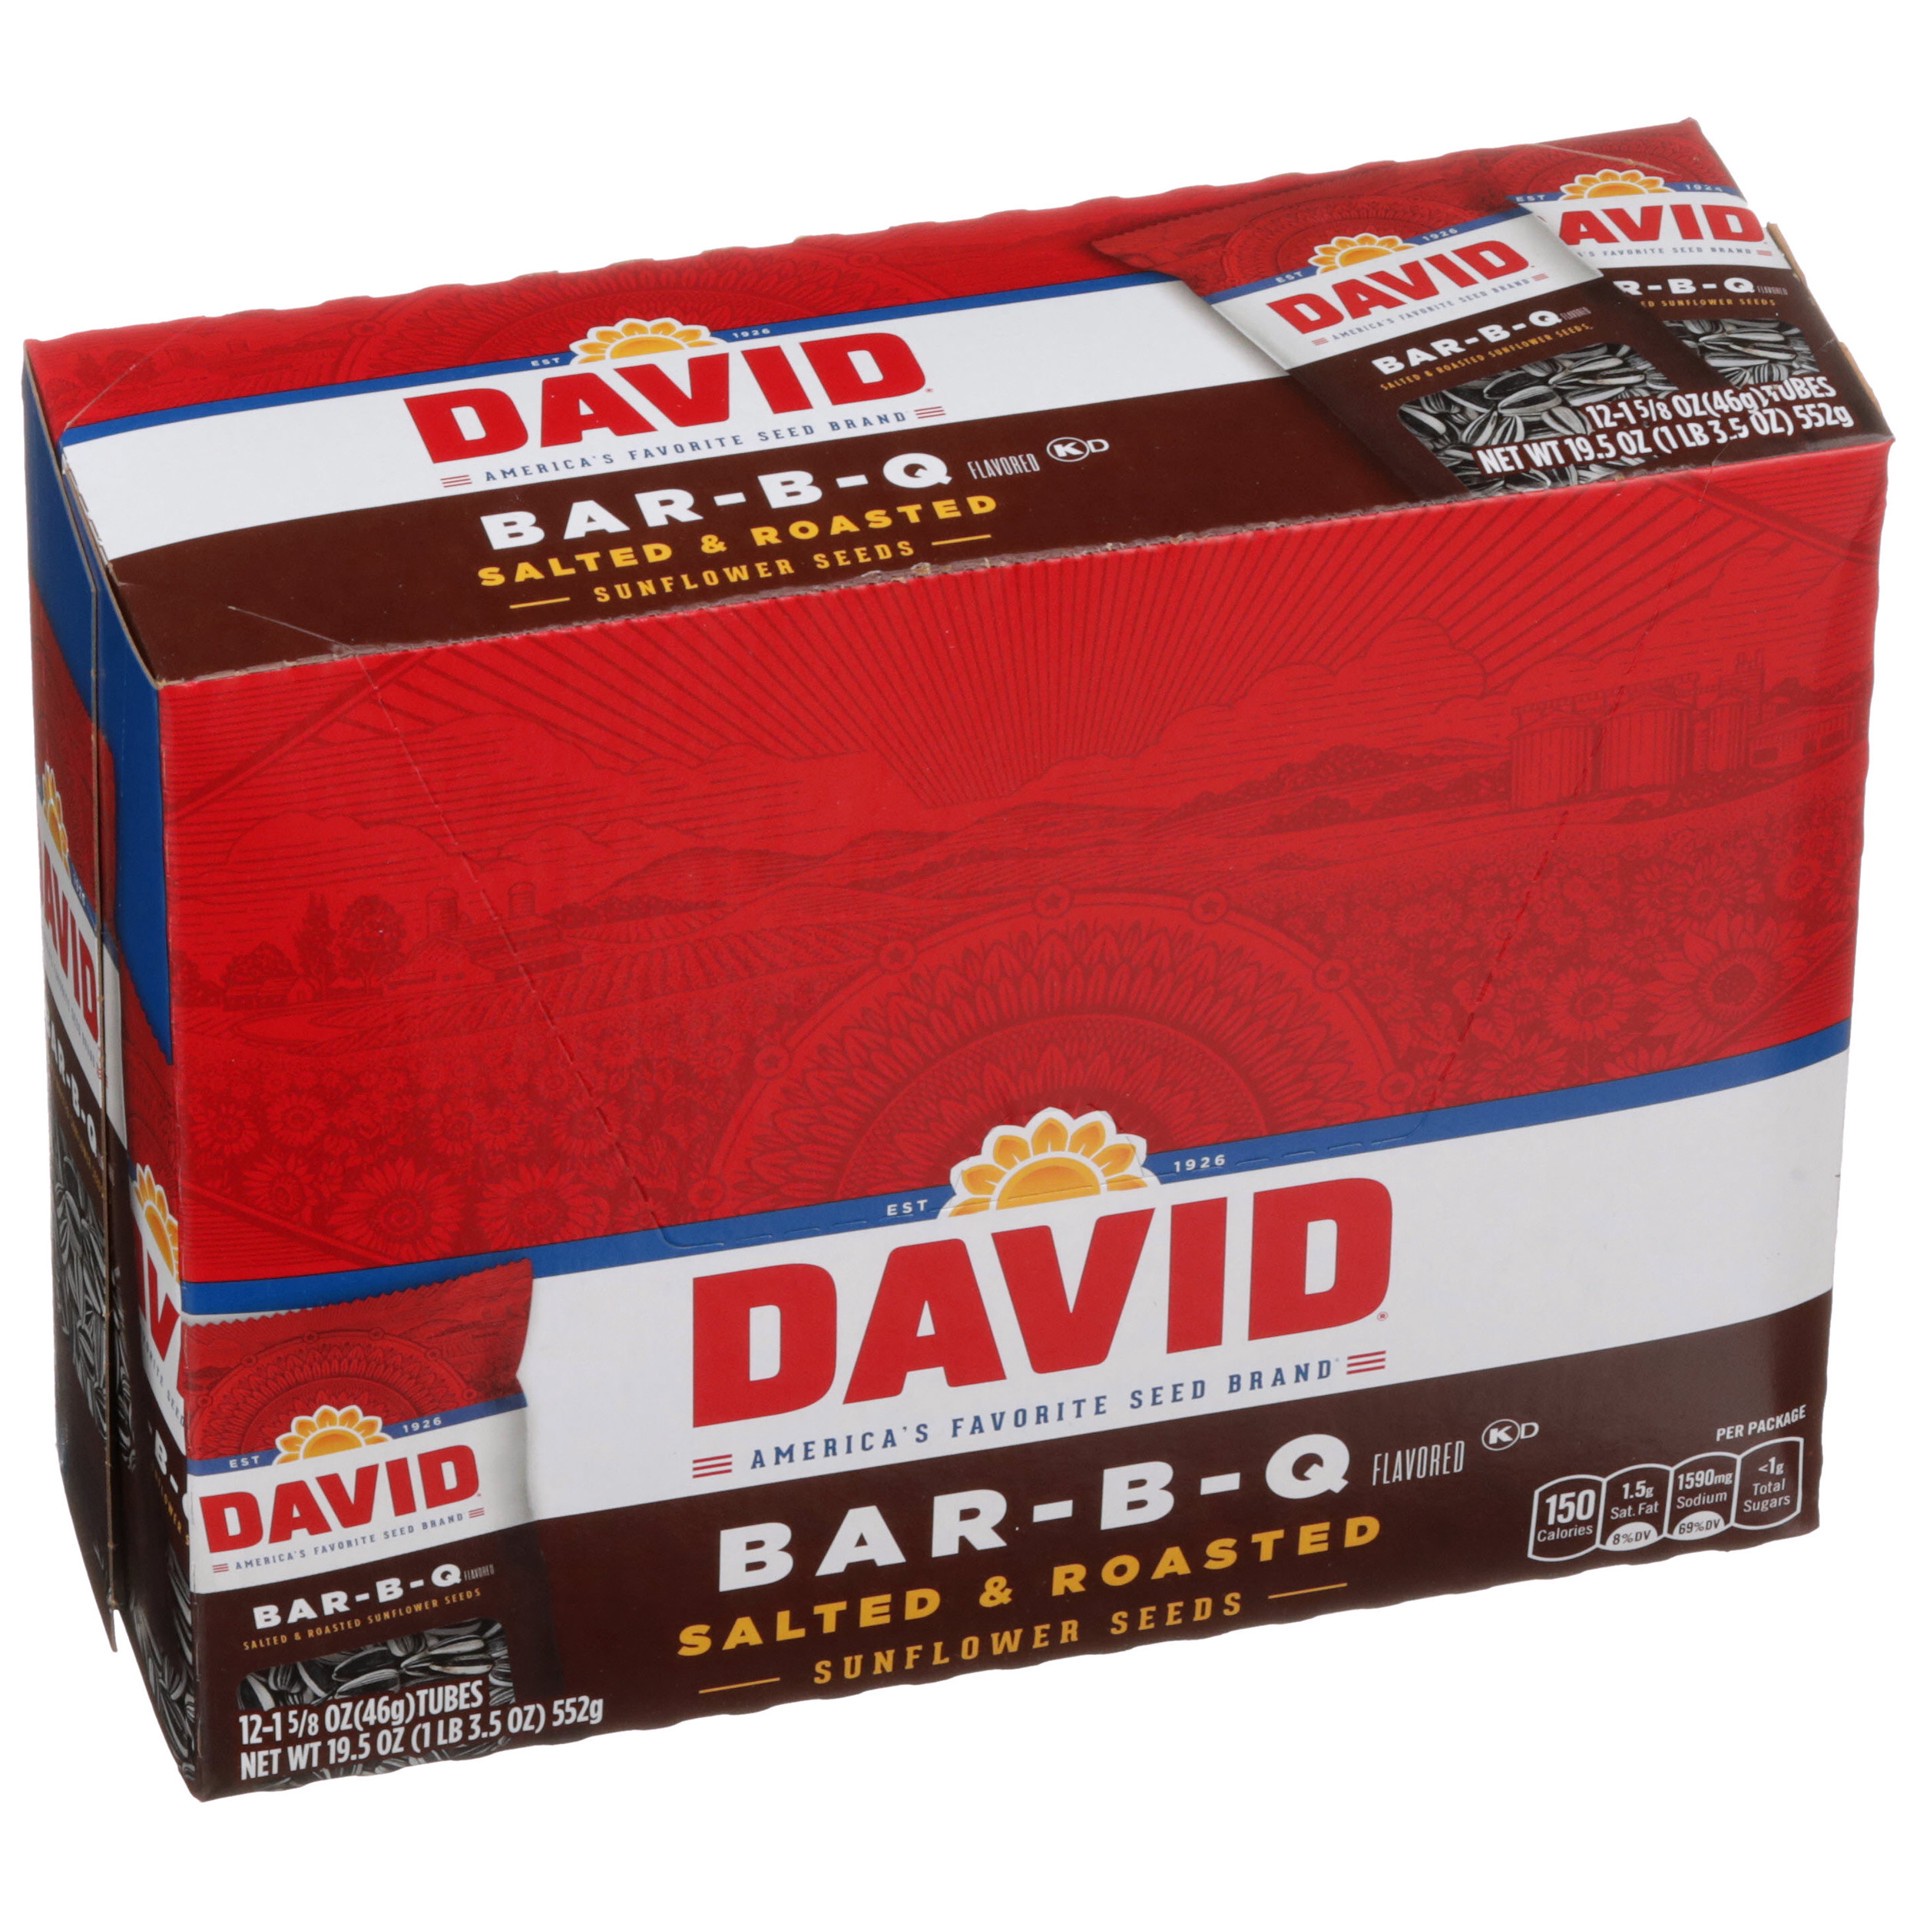 slide 5 of 5, DAVID Salted & Roasted Bar-B-Q Flavor Sunflower Seeds 1.625 oz, 1.62 oz